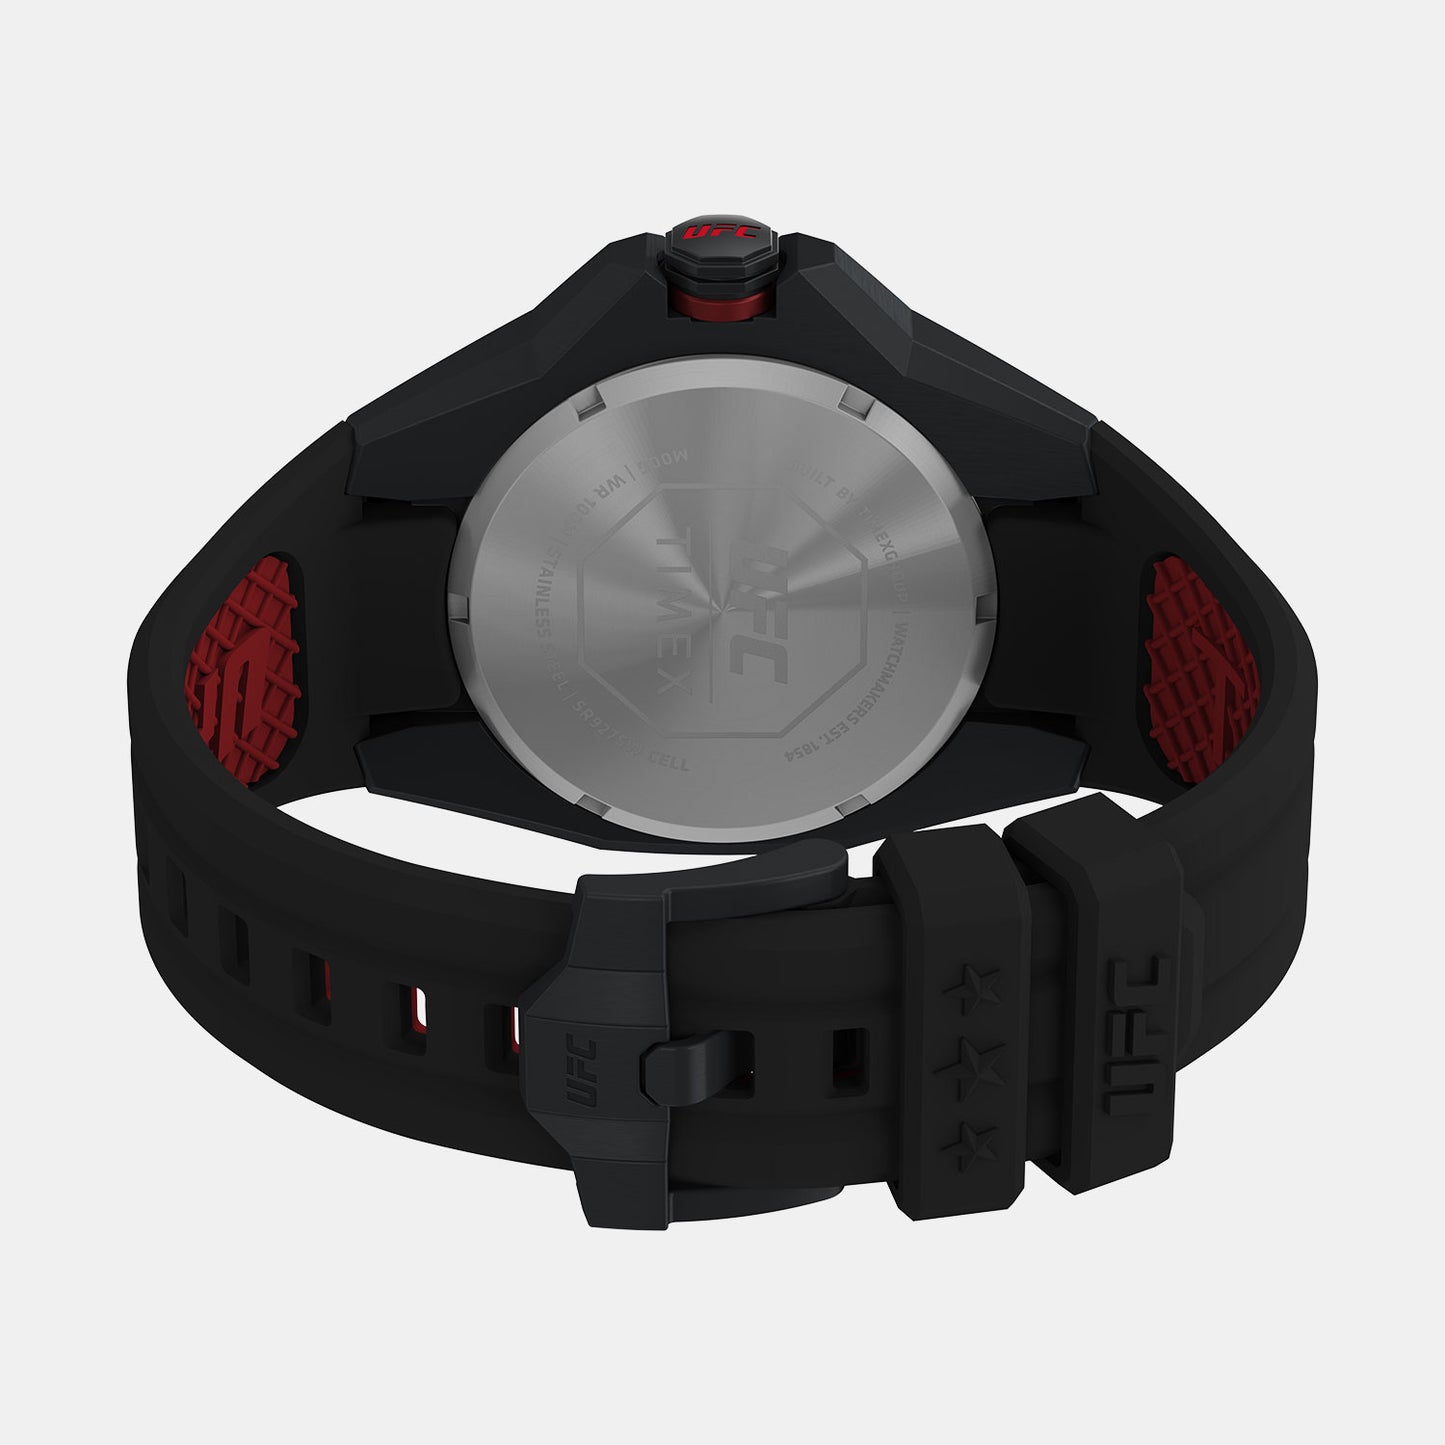 Ufc Street Male Black Analog Stainless Steel Watch TW2V57300X6